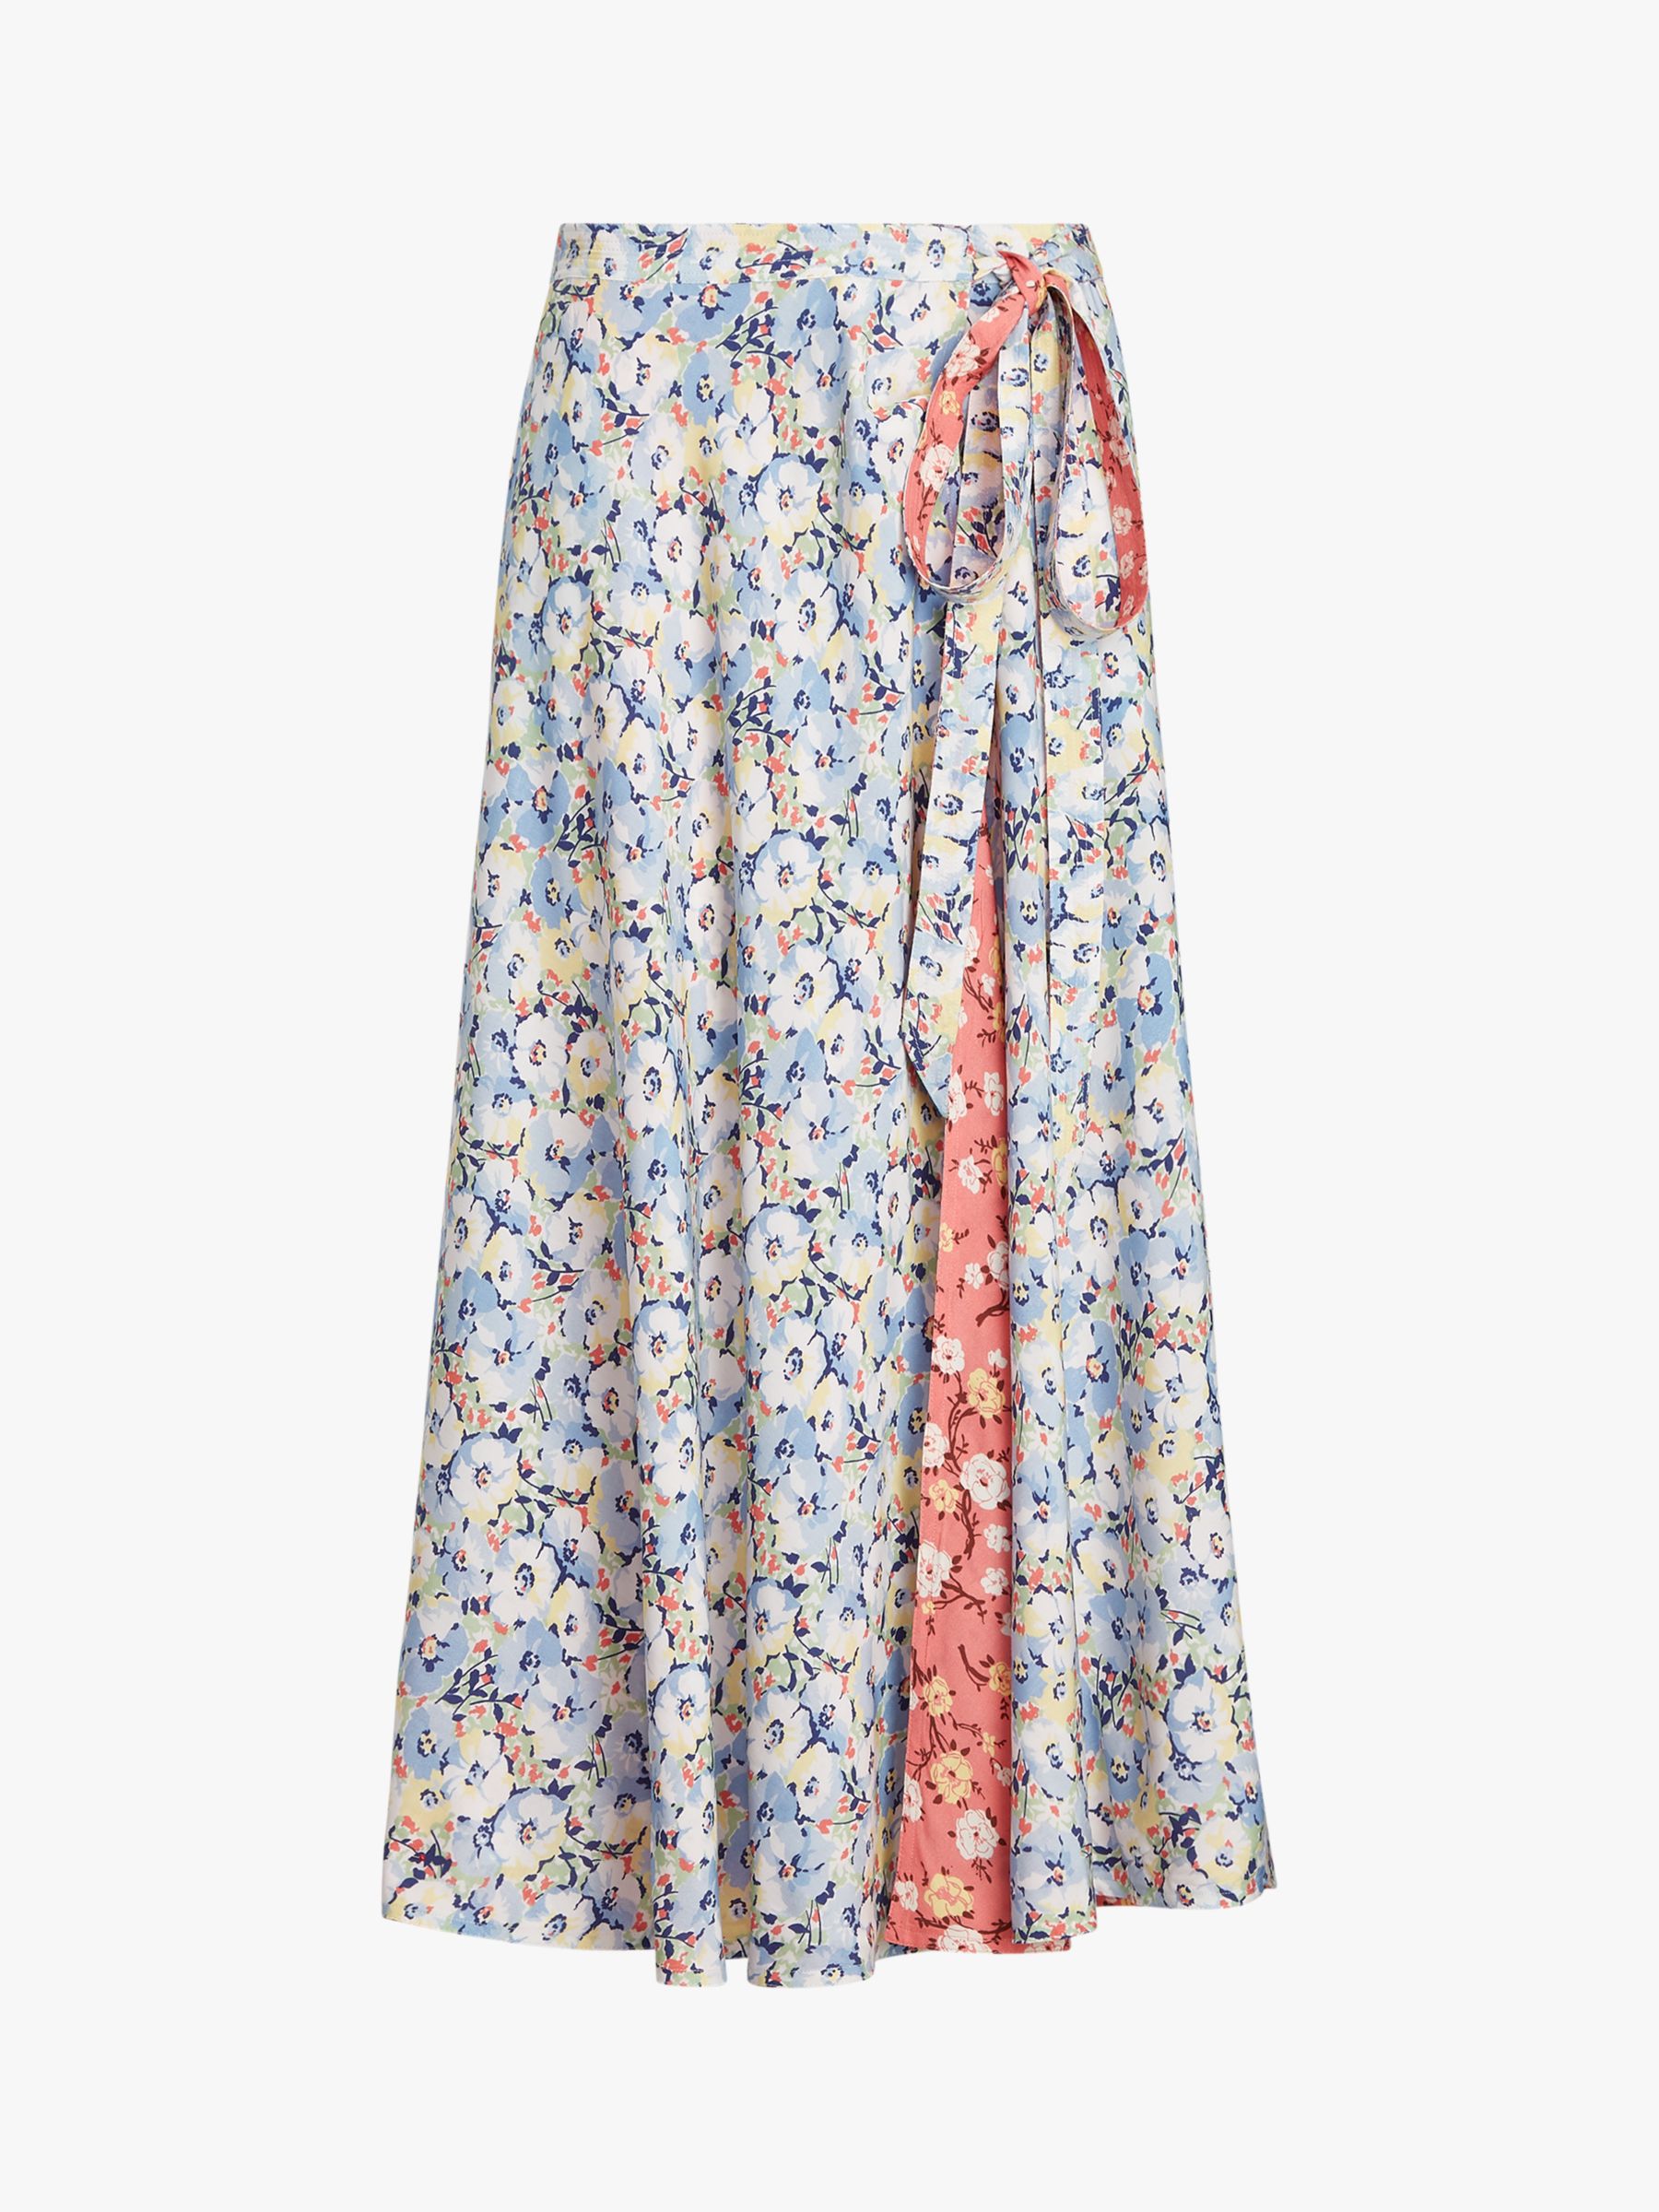 Polo Ralph Lauren Reversible Floral Print Maxi Skirt, Blush/Multi